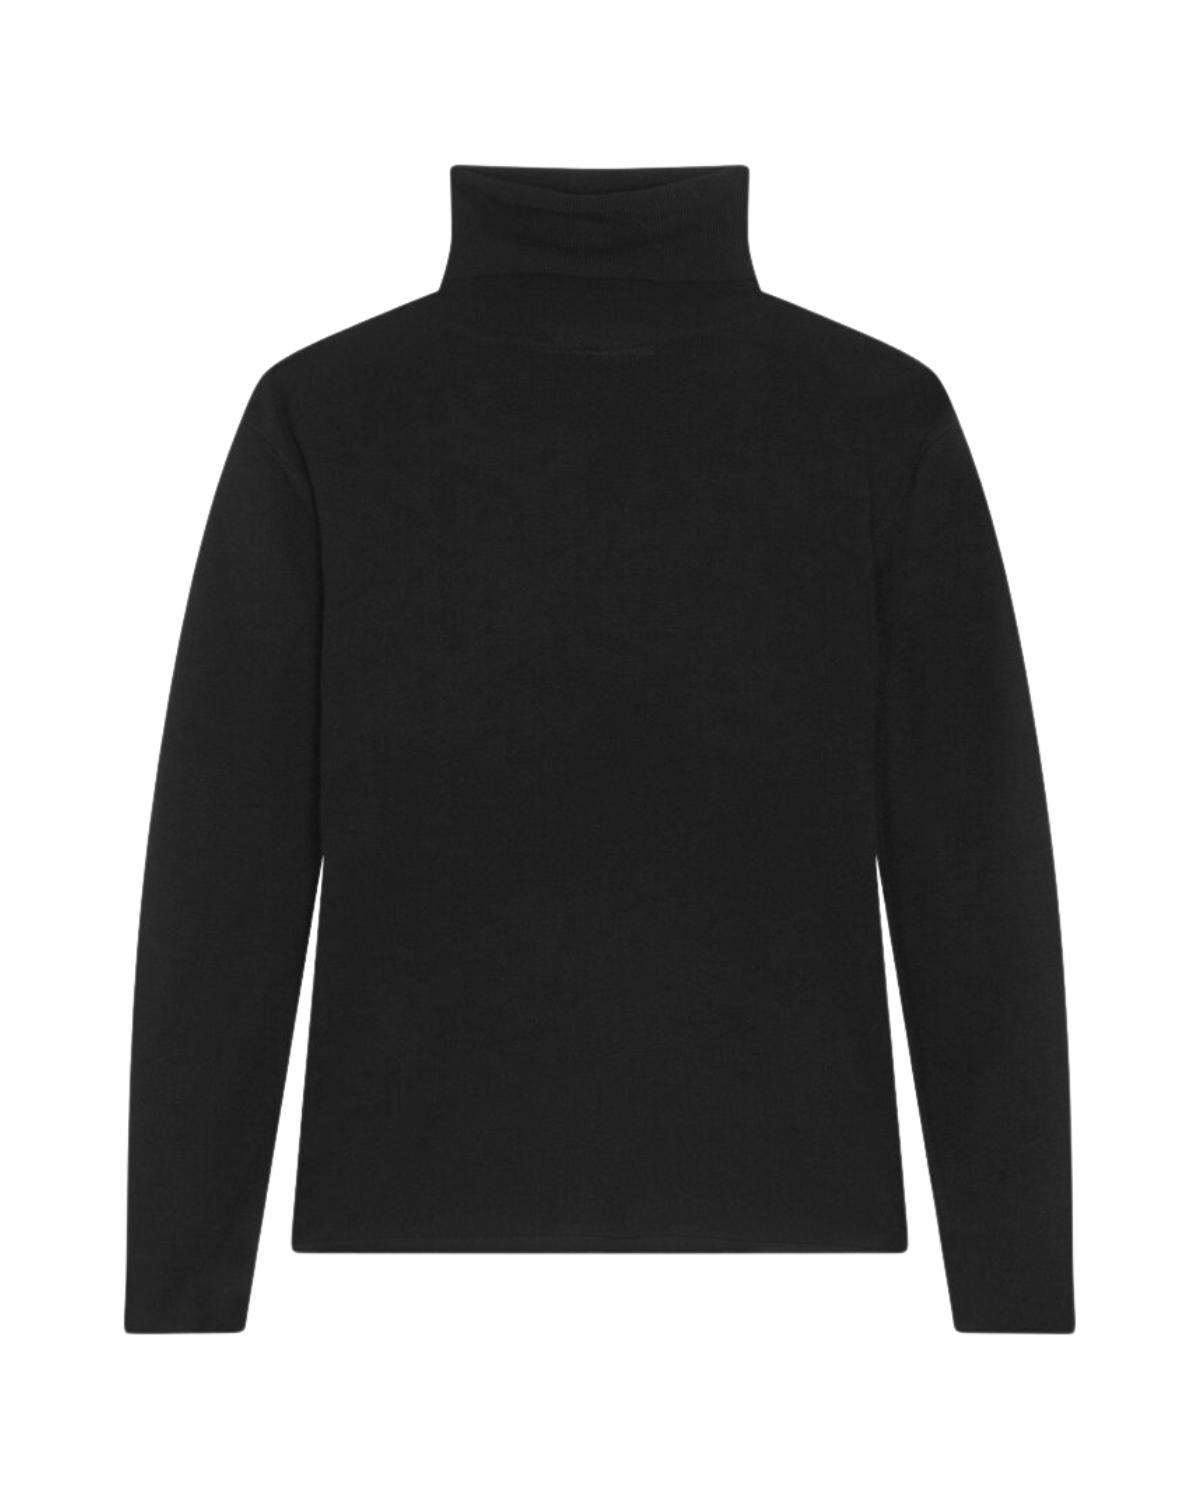 Aerio Turtleneck Sweater (Noir)